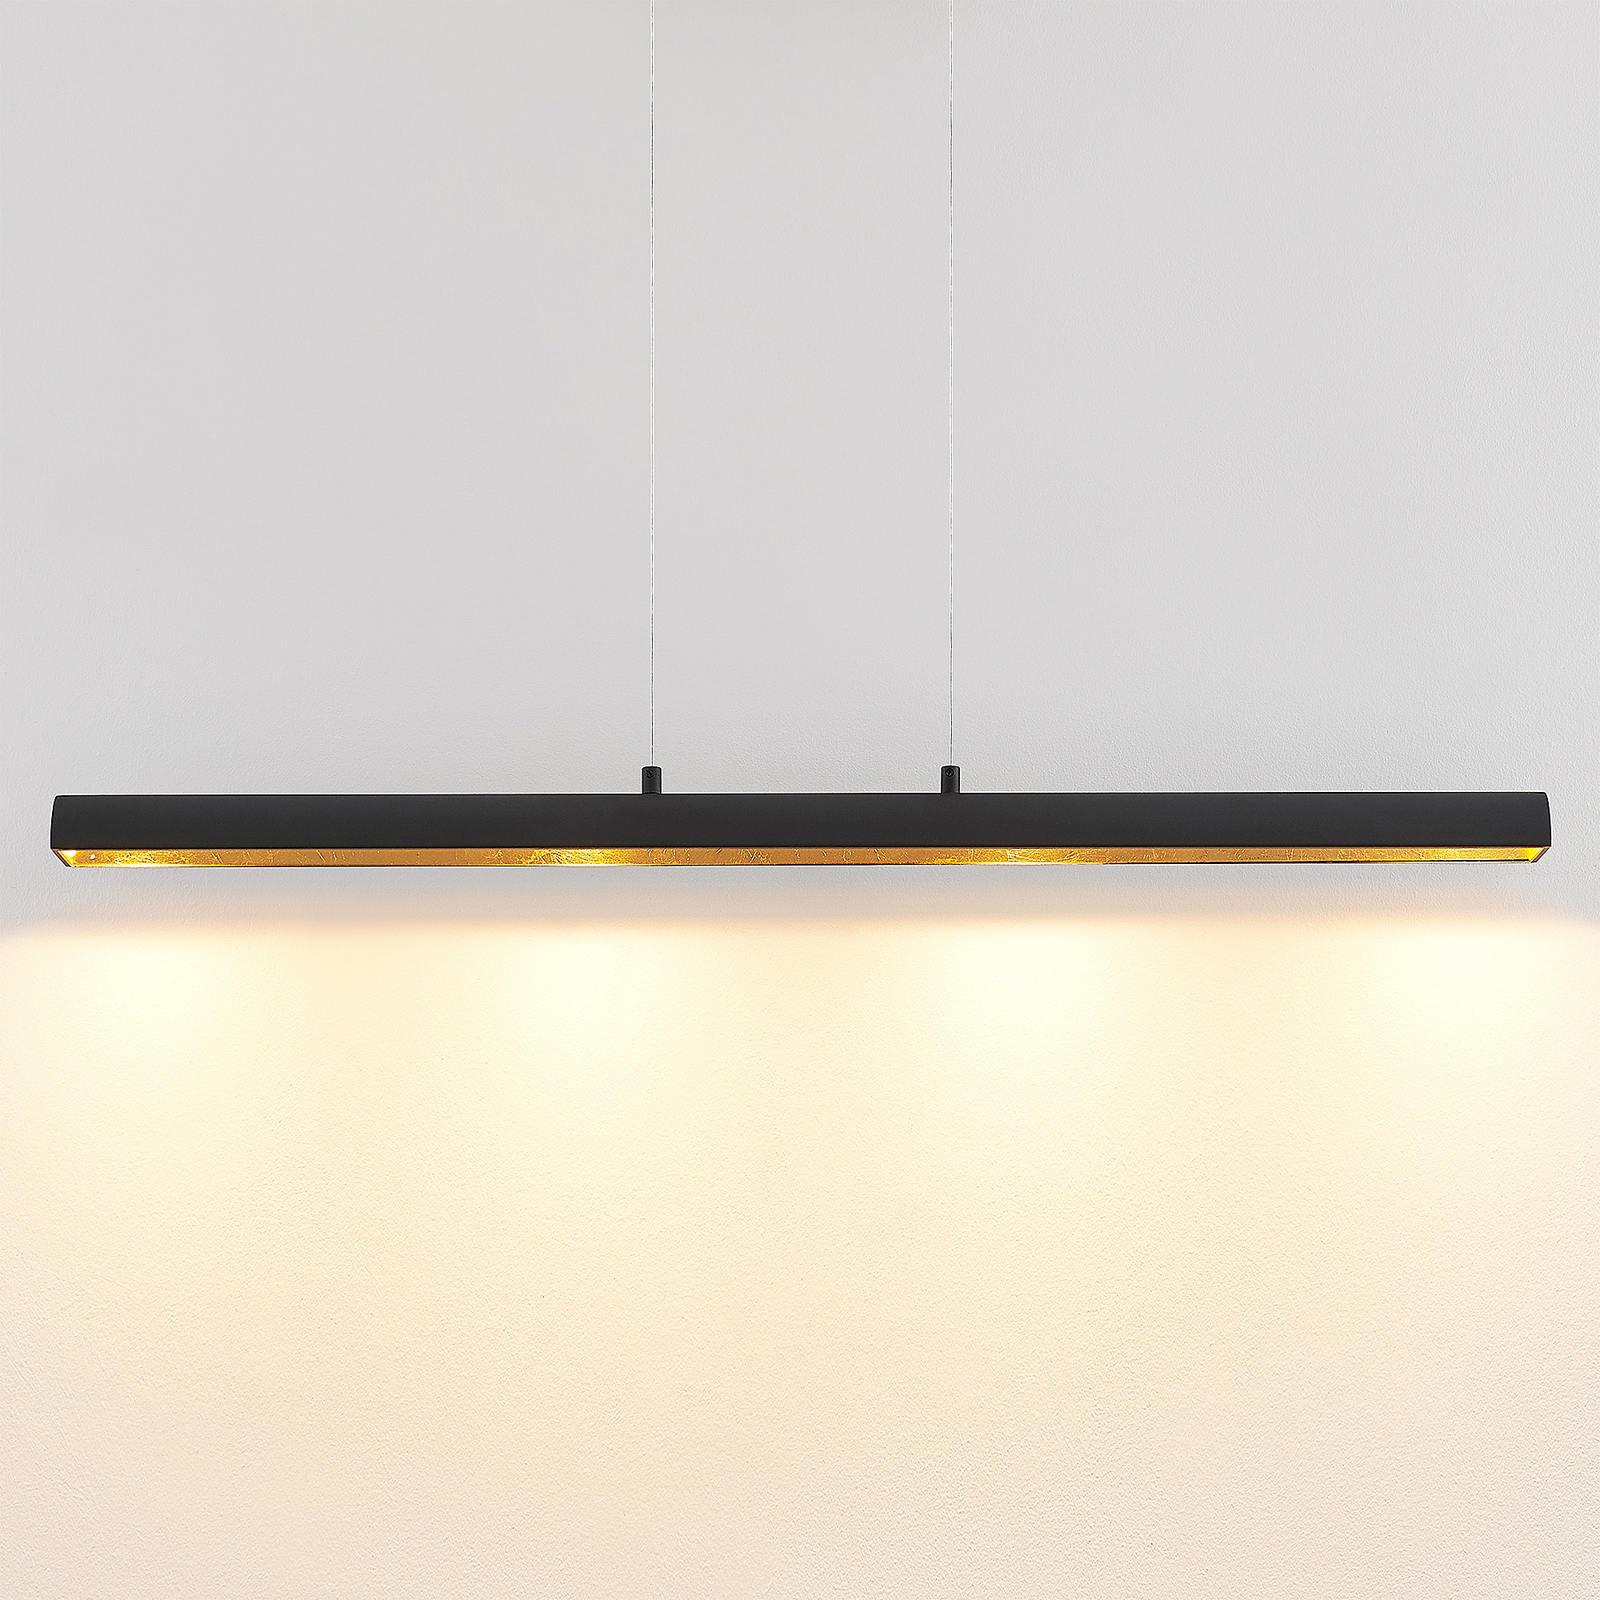 Lindby Solvina LED eettafel-hanglamp, langwerpig